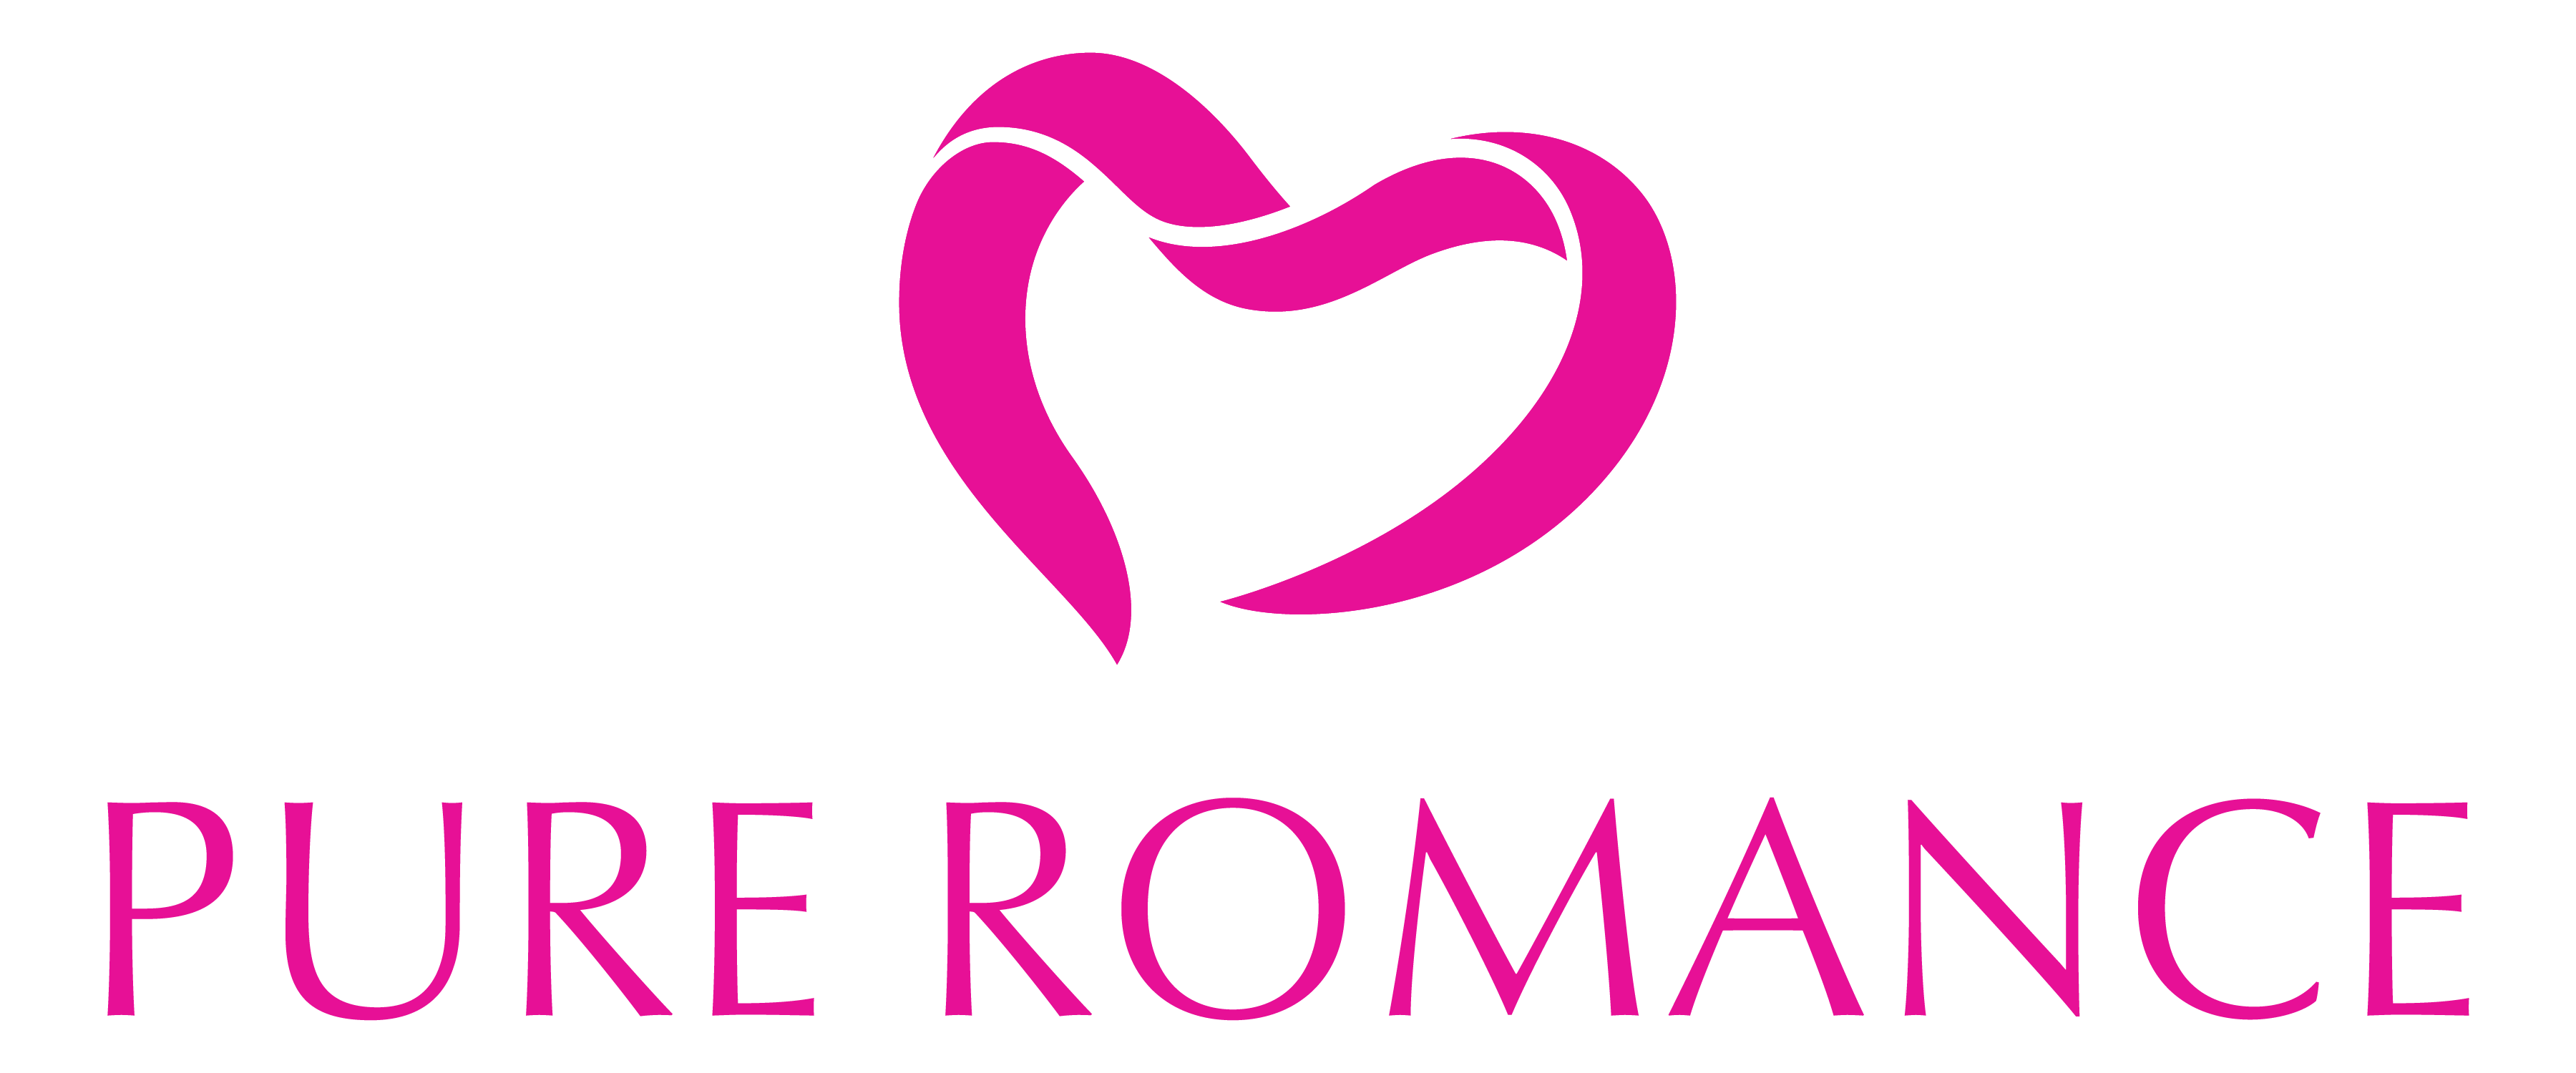 Pure Romance Logo - Pure romance Logos